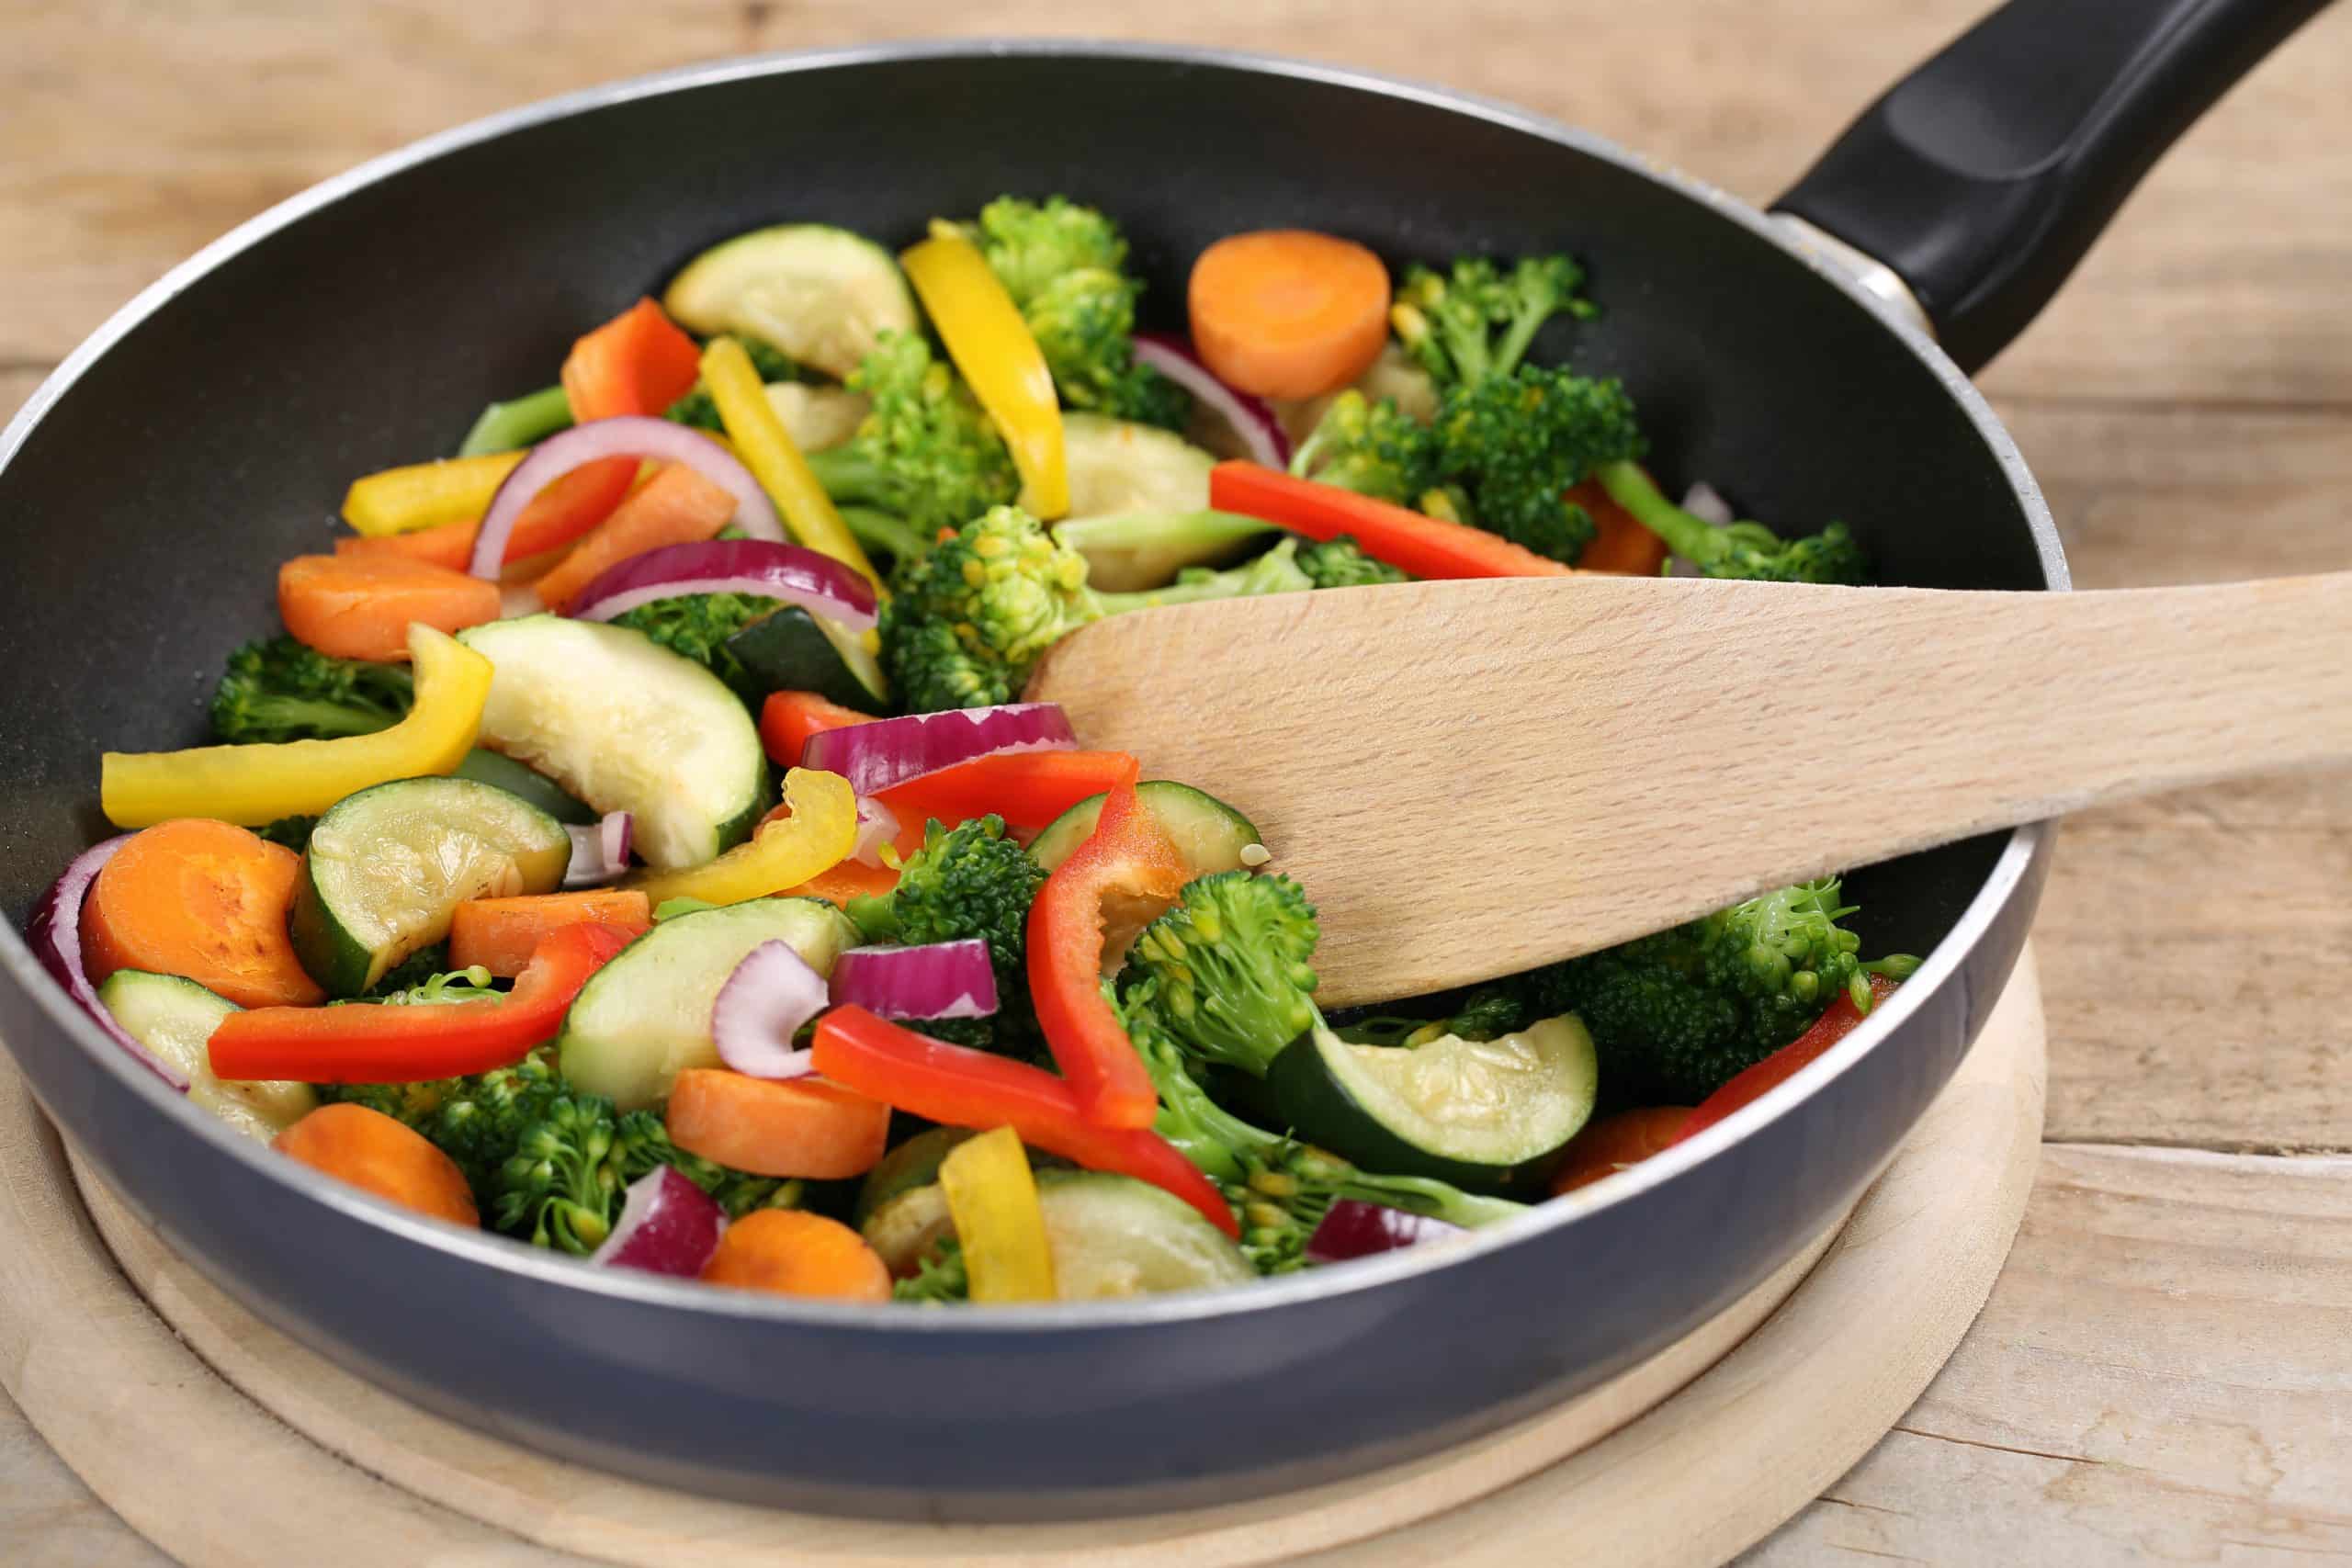 Veggie pan with carrots